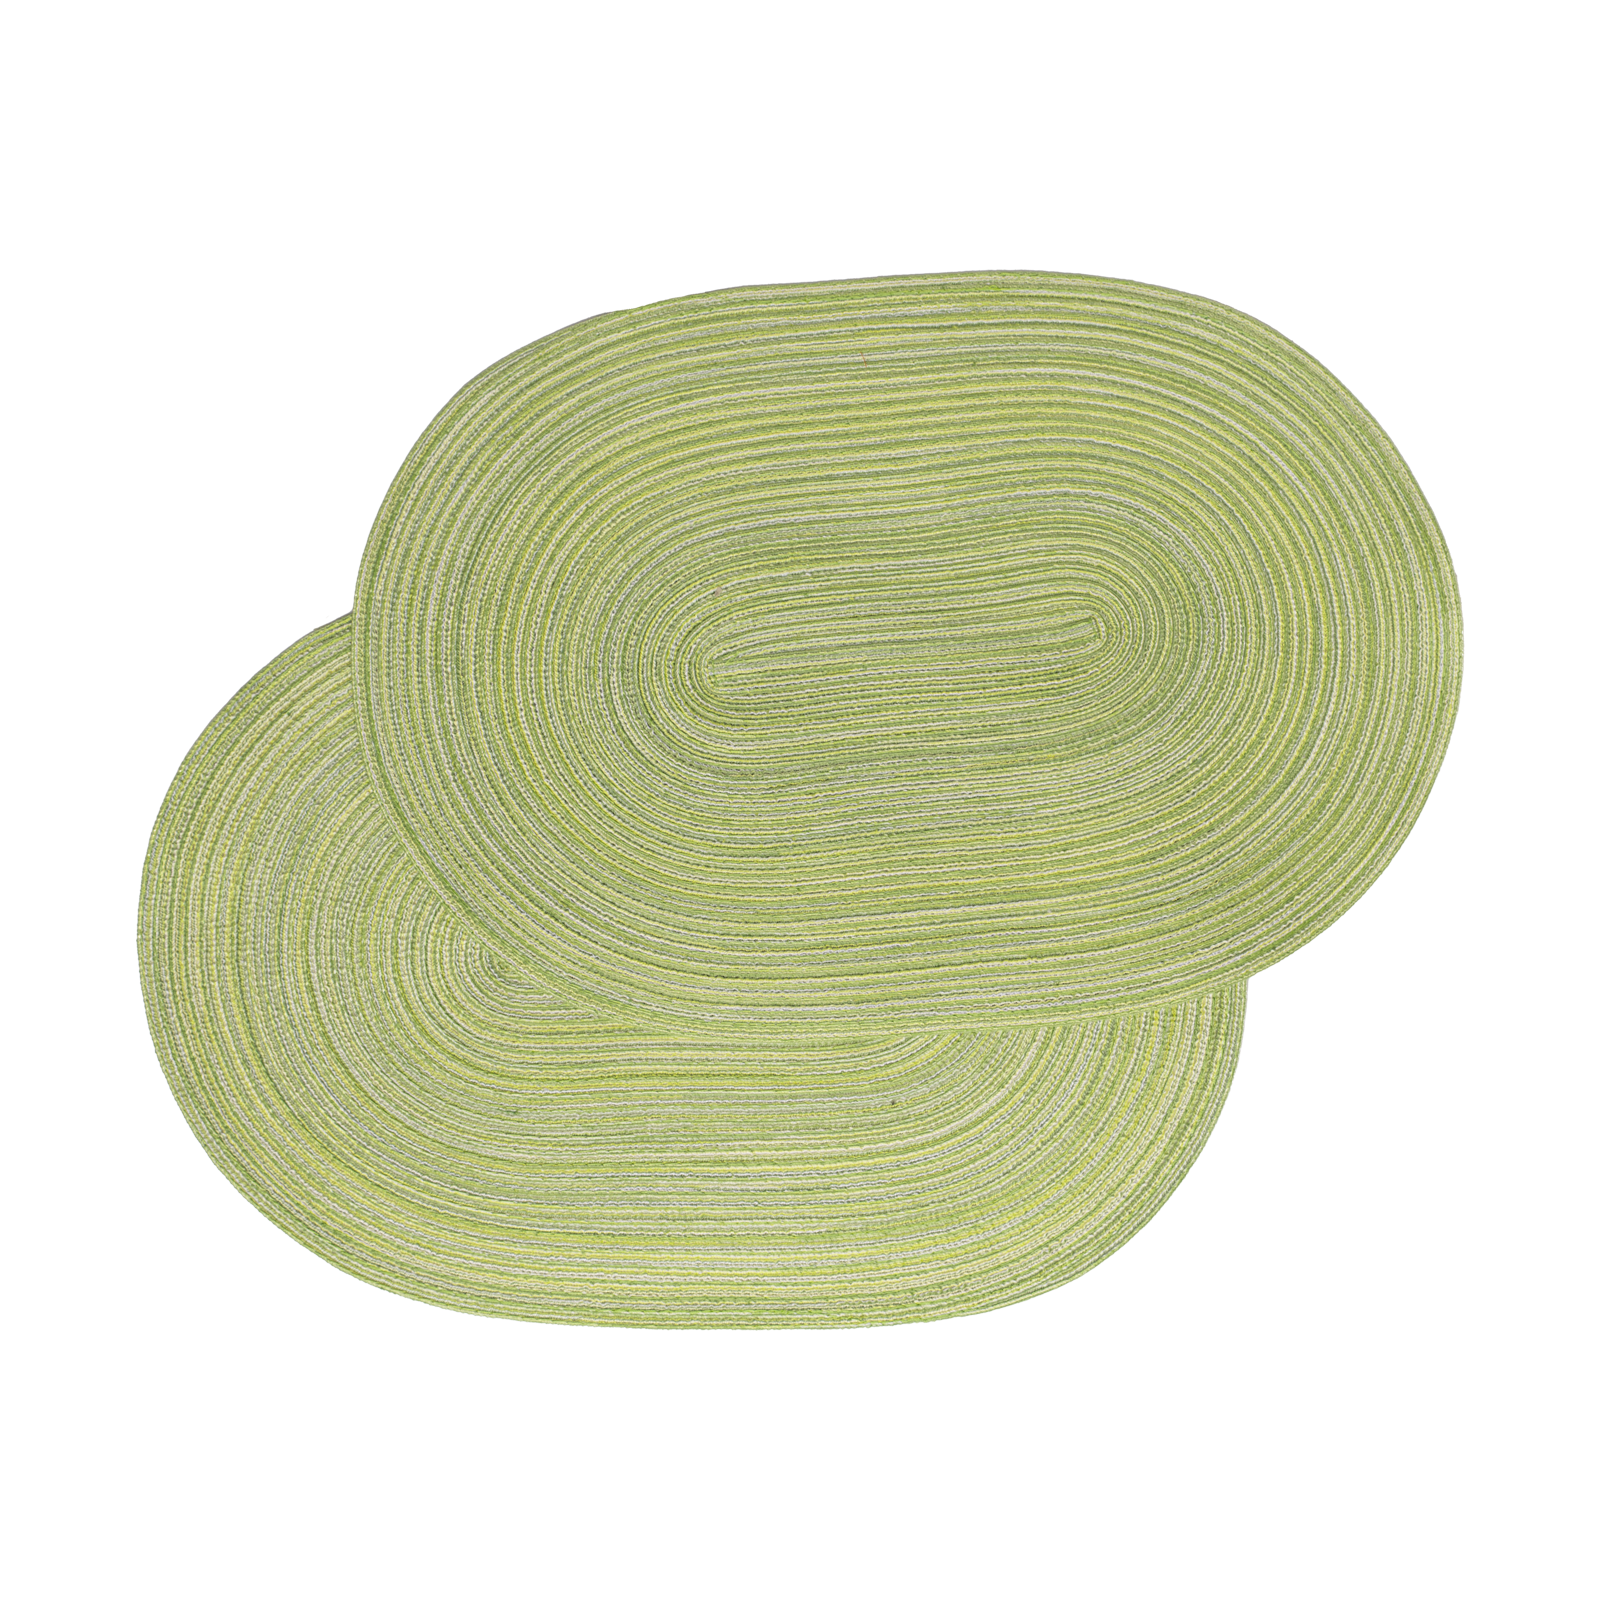 Größe: 33x 48 cm Farbe: limone #farbe_limone